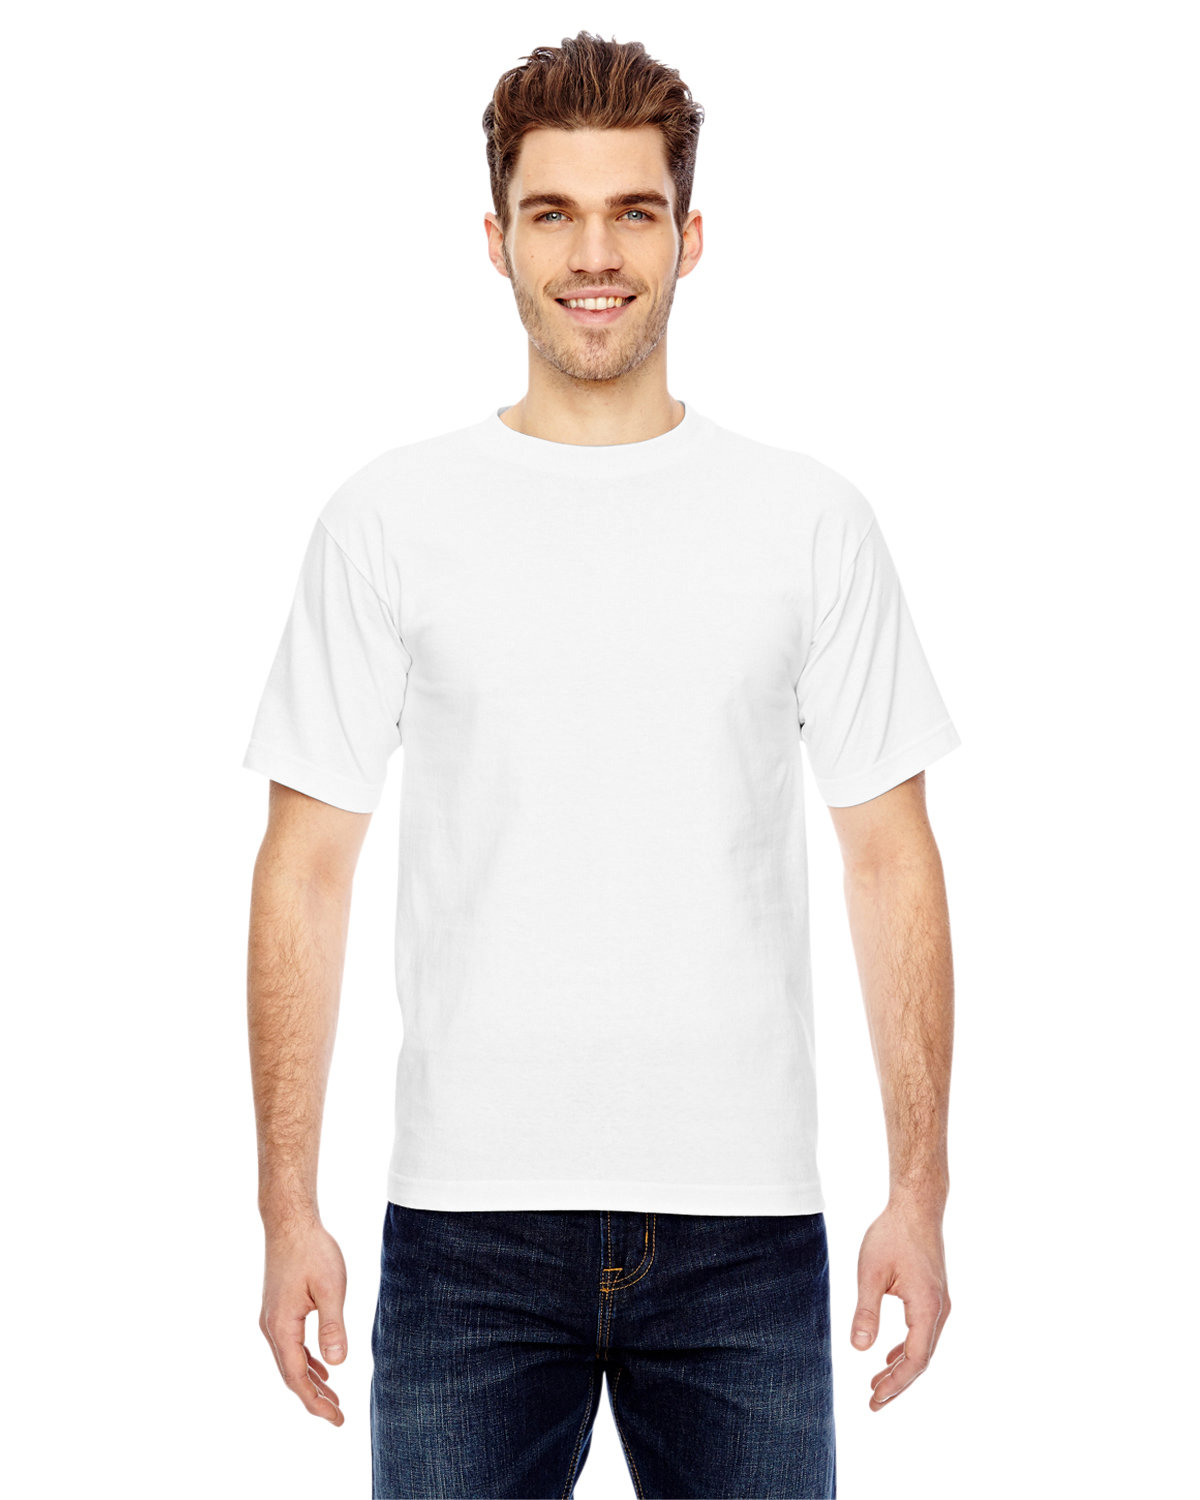 Buy Unisex Heavyweight T-Shirt - Bayside Online at Best price - NC